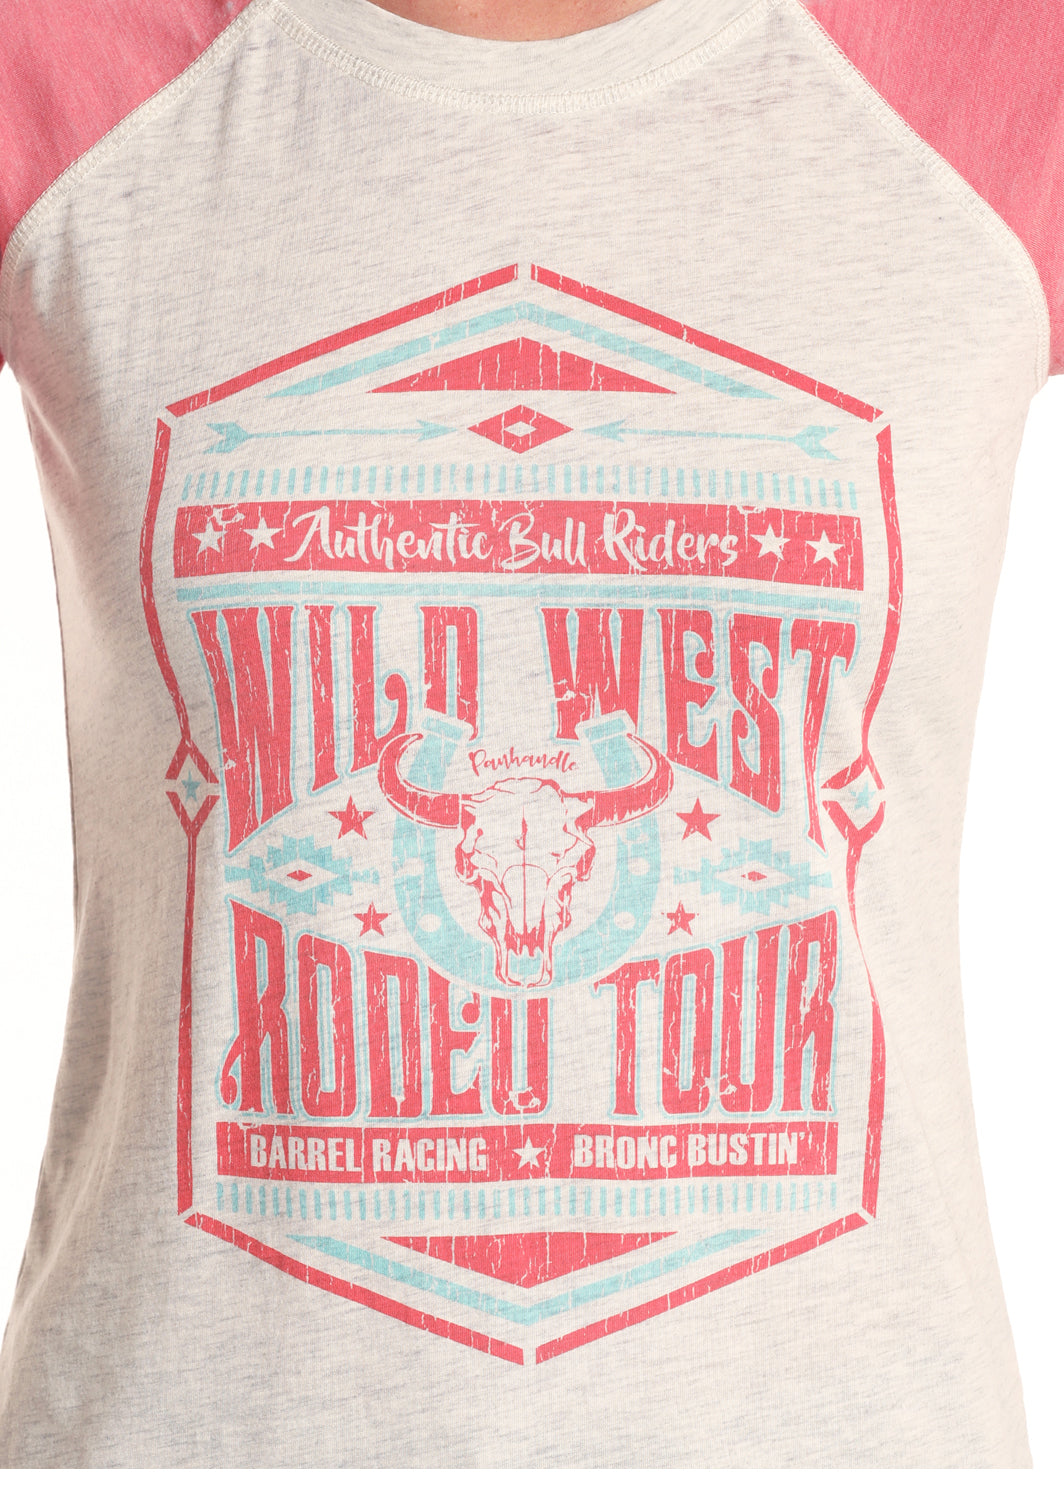 Panhandle White Label Ladies Wild West Rodeo Tour T-shirt L9T5381